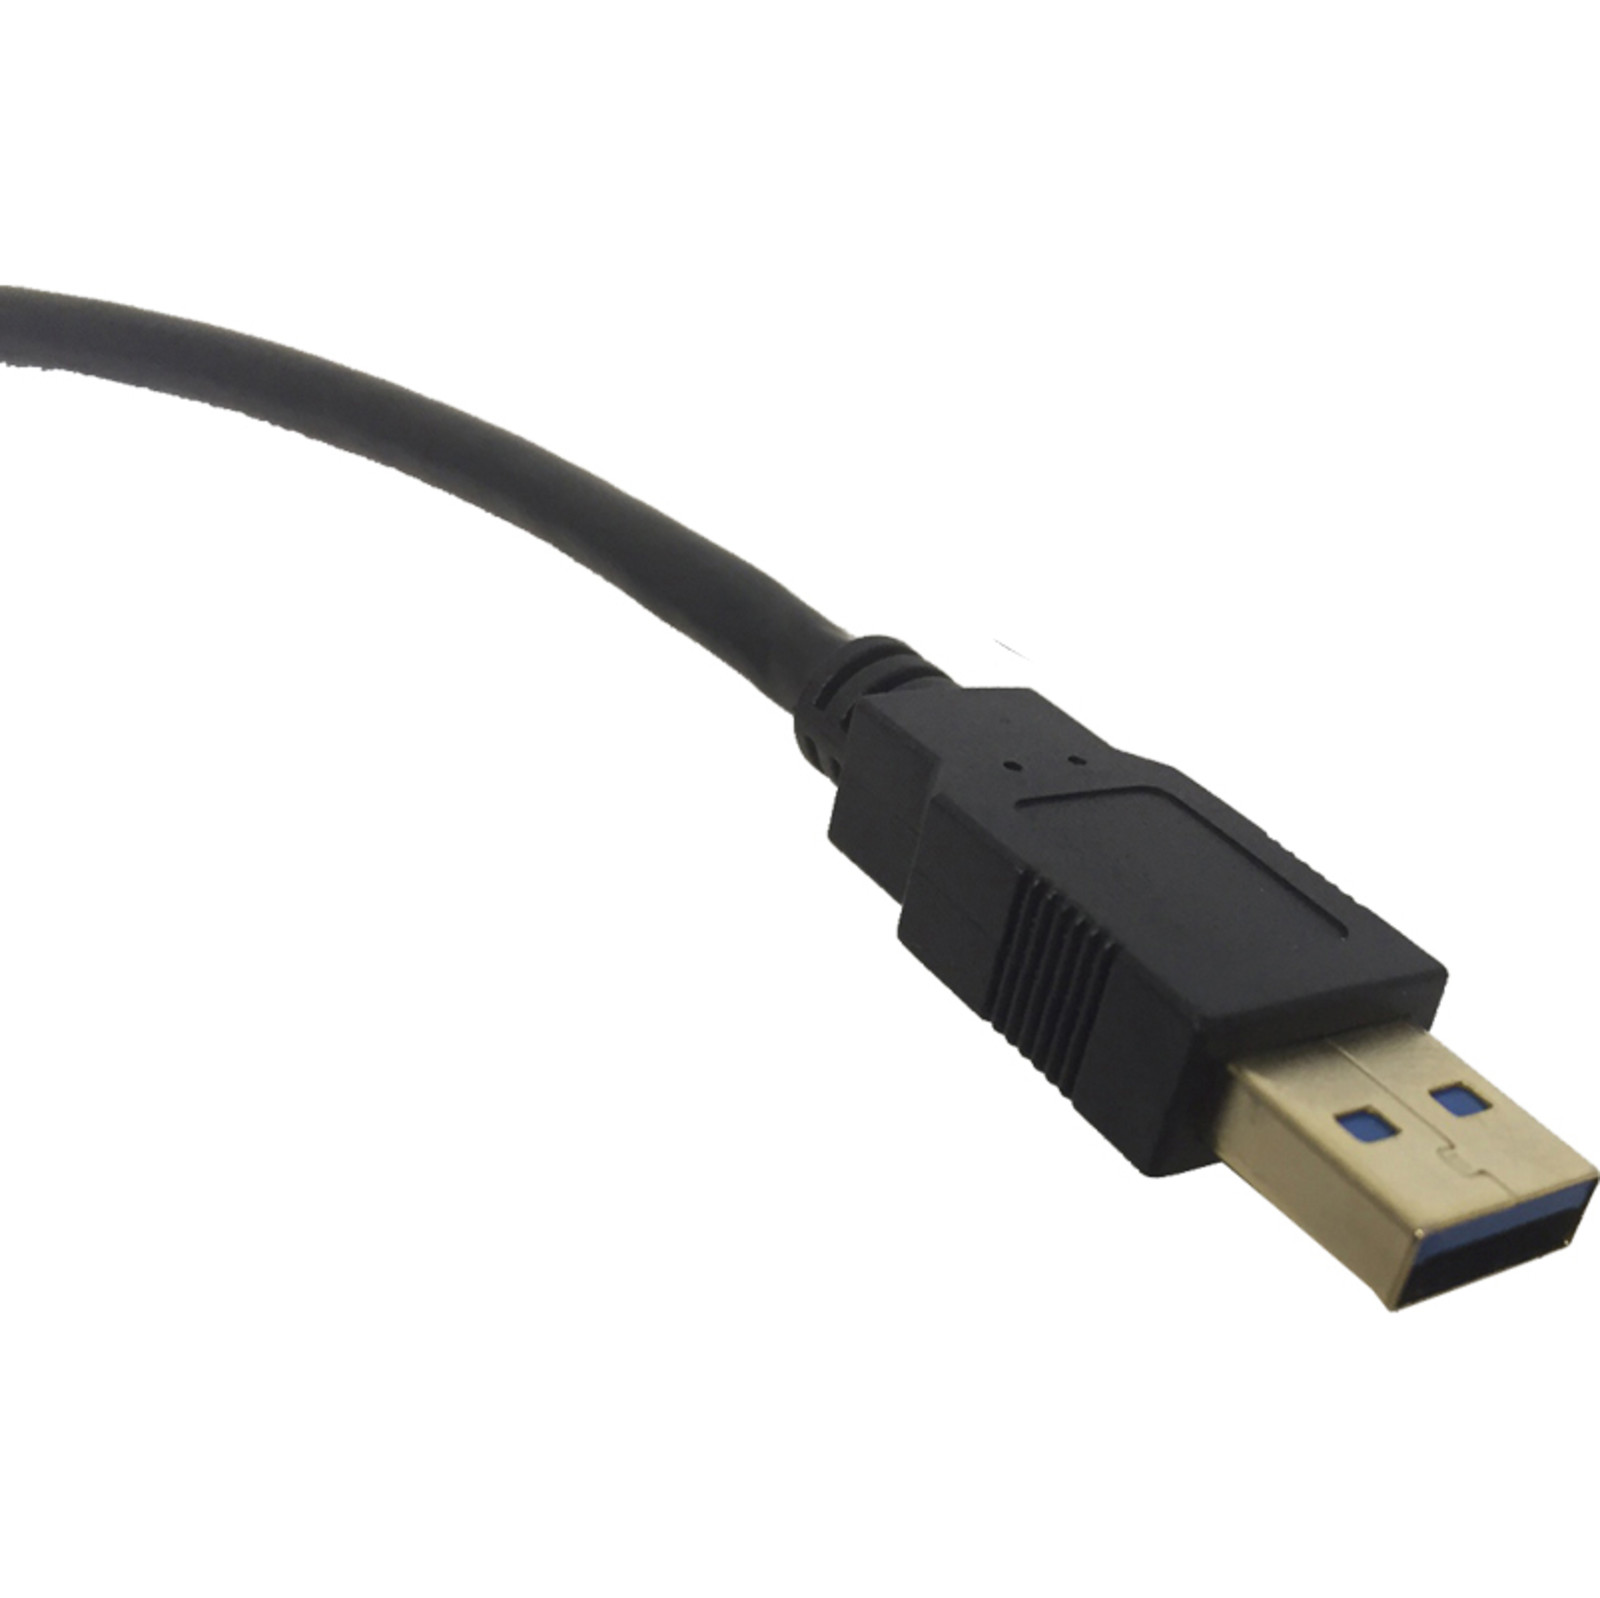 Excel câble rallonge USB 2.0 A mâle - A femelle - Noir - 1 m